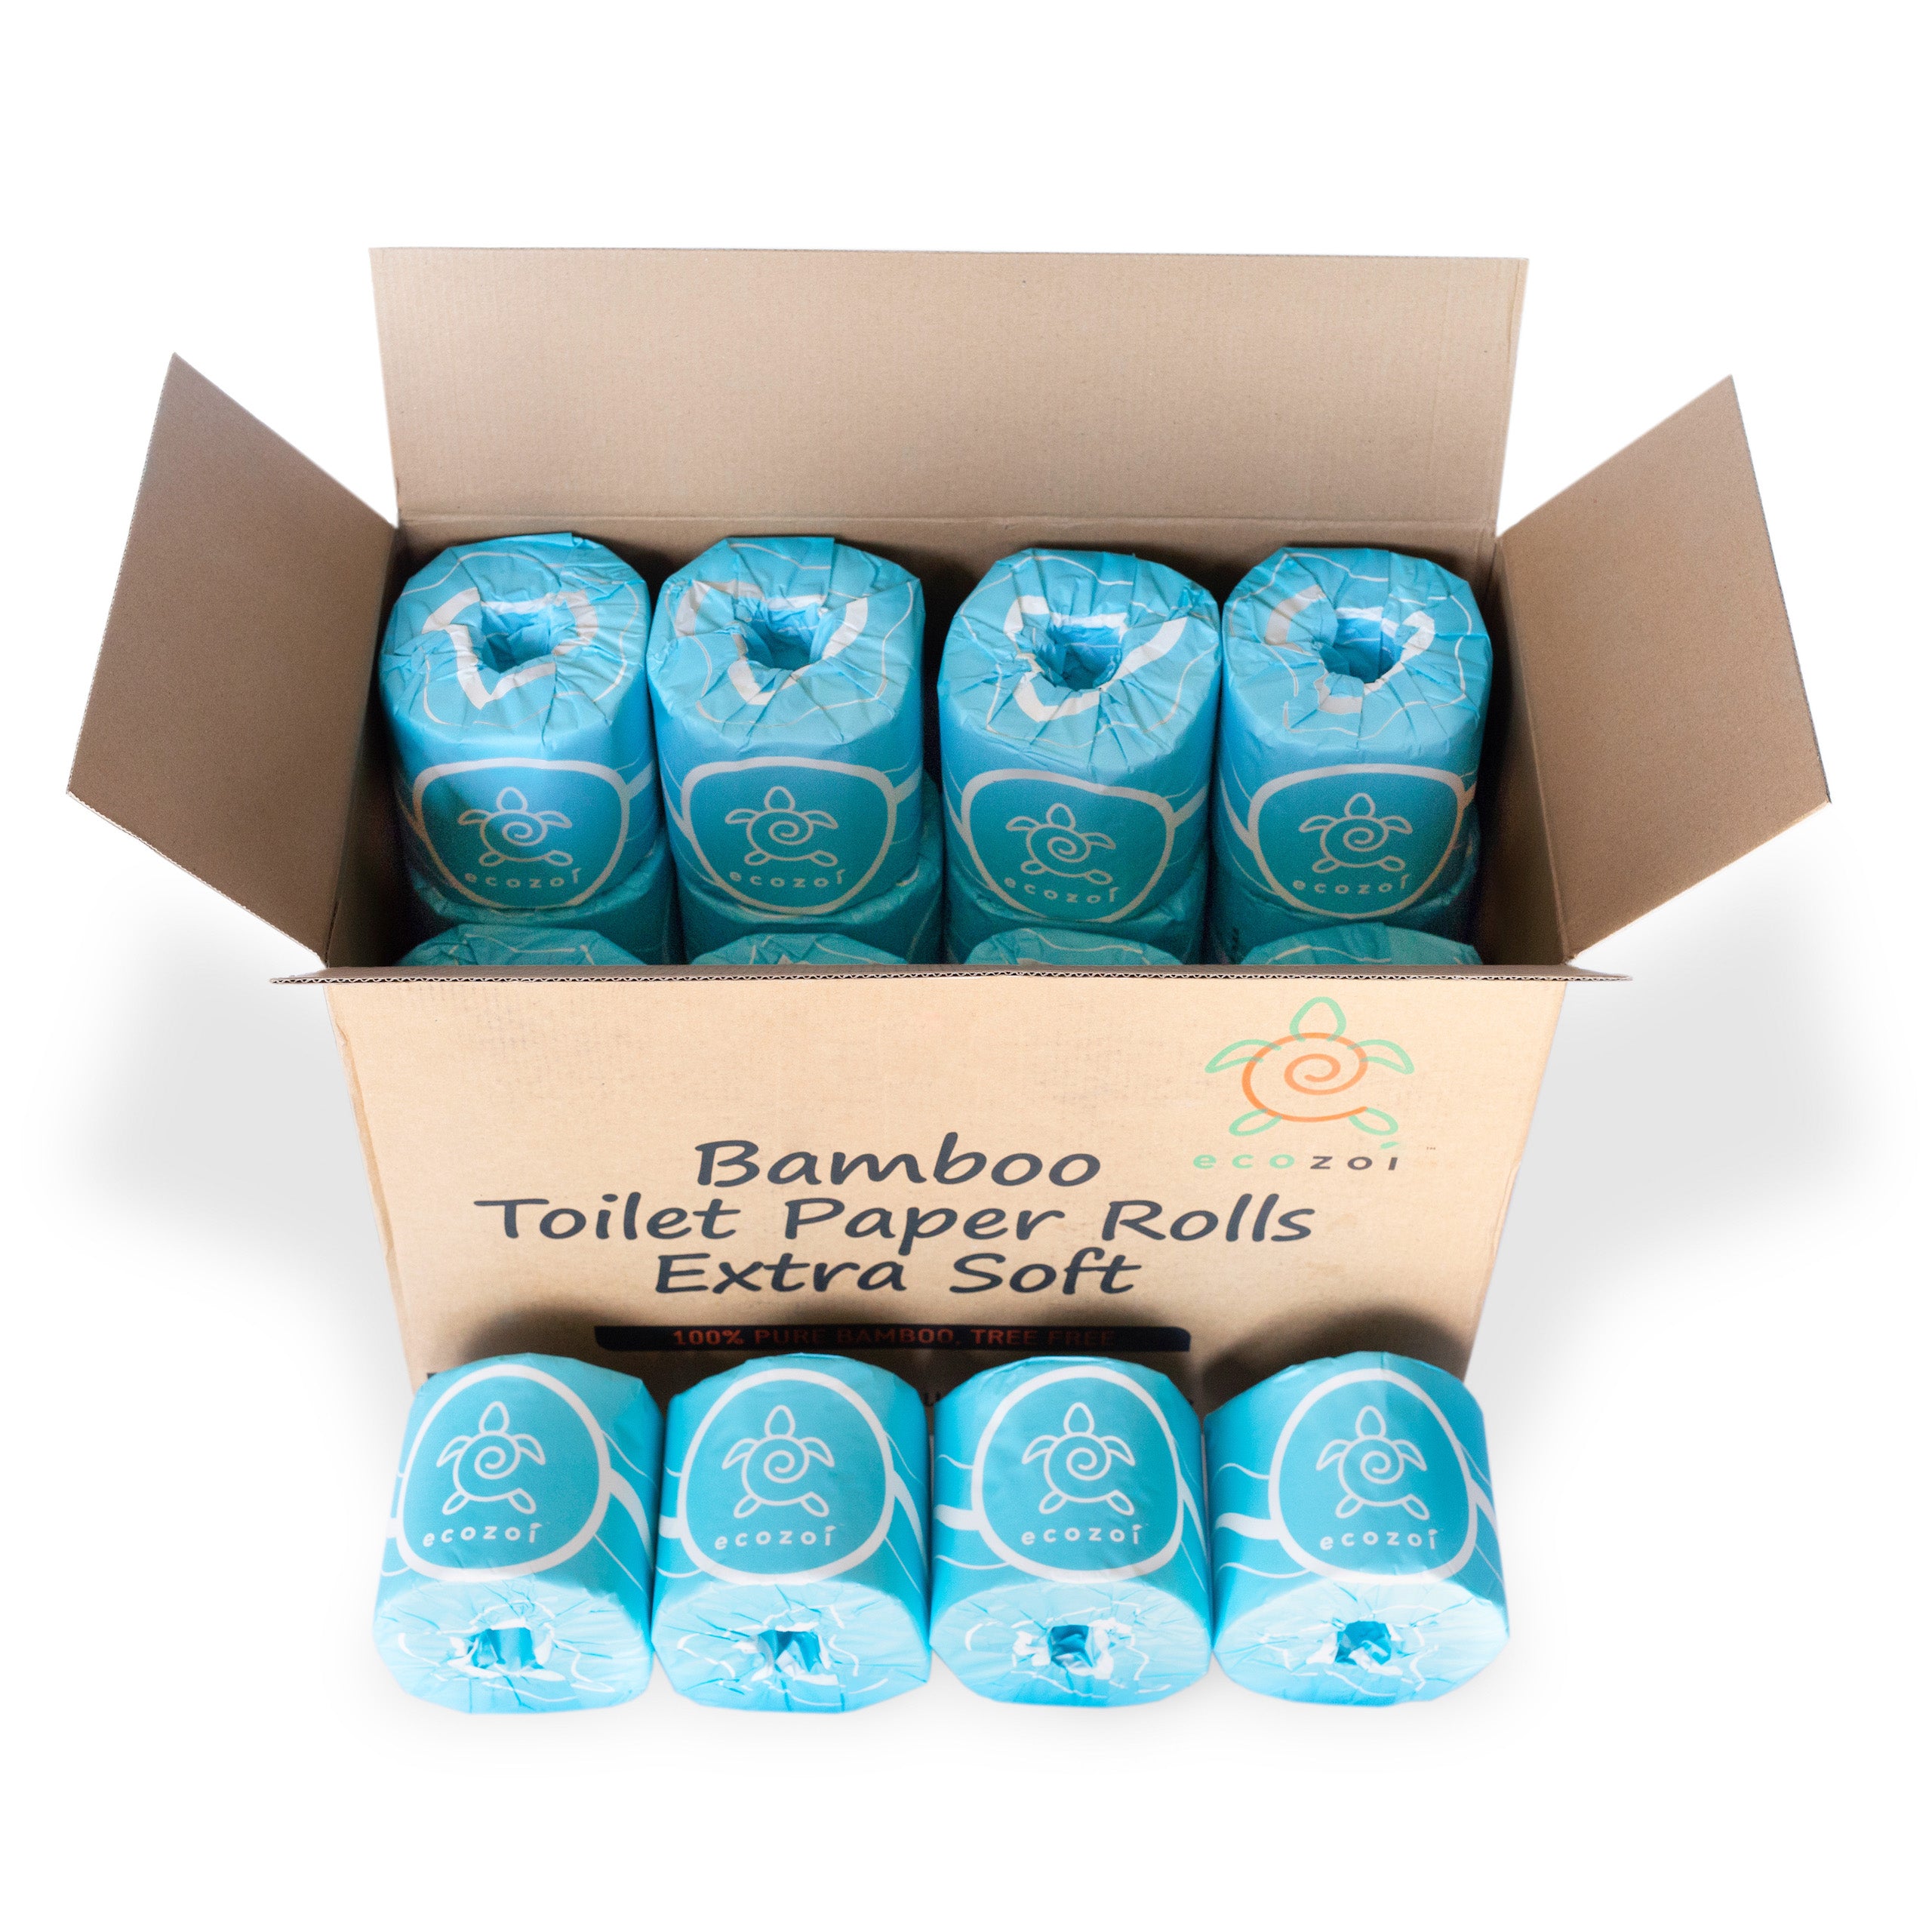 Reel, Tree-Free, 100% Bamboo Toilet Paper (Box of 24 Rolls